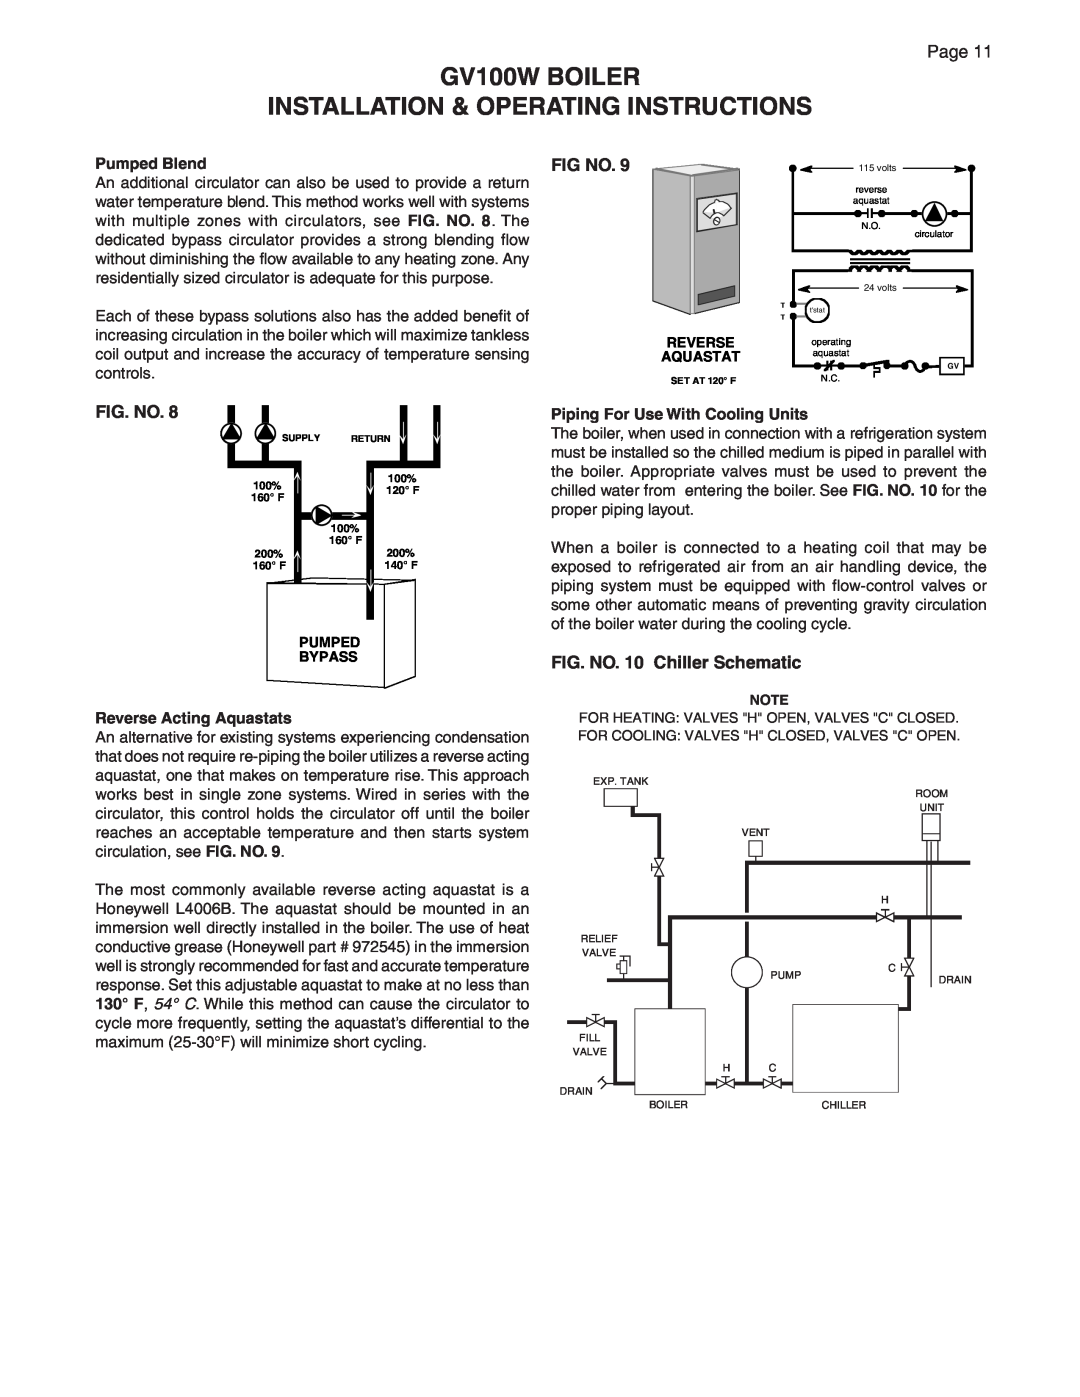 Smith Cast Iron Boilers GVIOM-5R manual GV100W BOILER, Installation & Operating Instructions, Fig No, Fig. No 